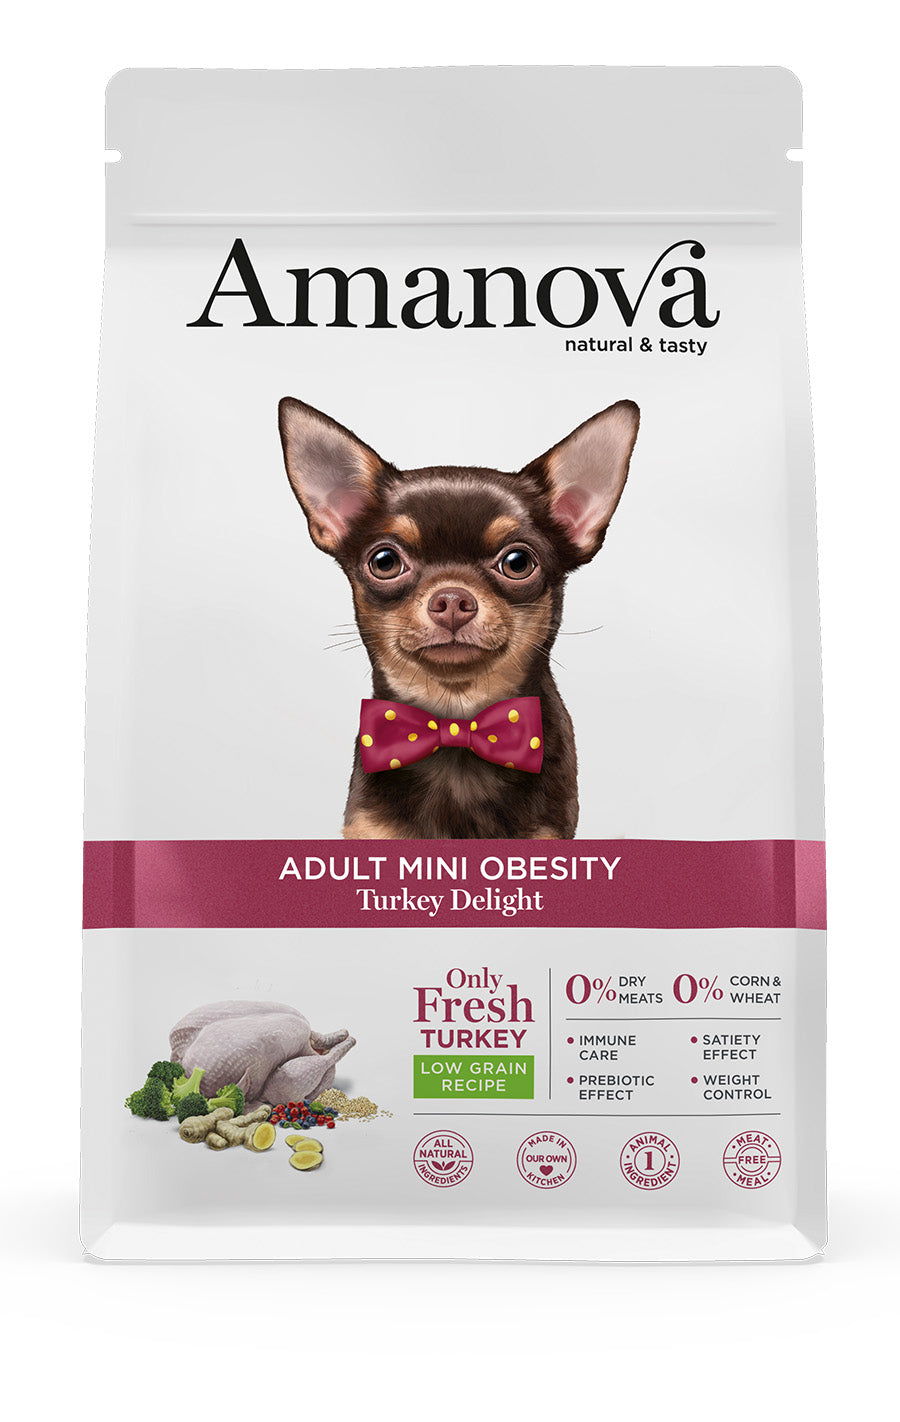 Adult mini obesity - Turkey Delight - Pavo fresco